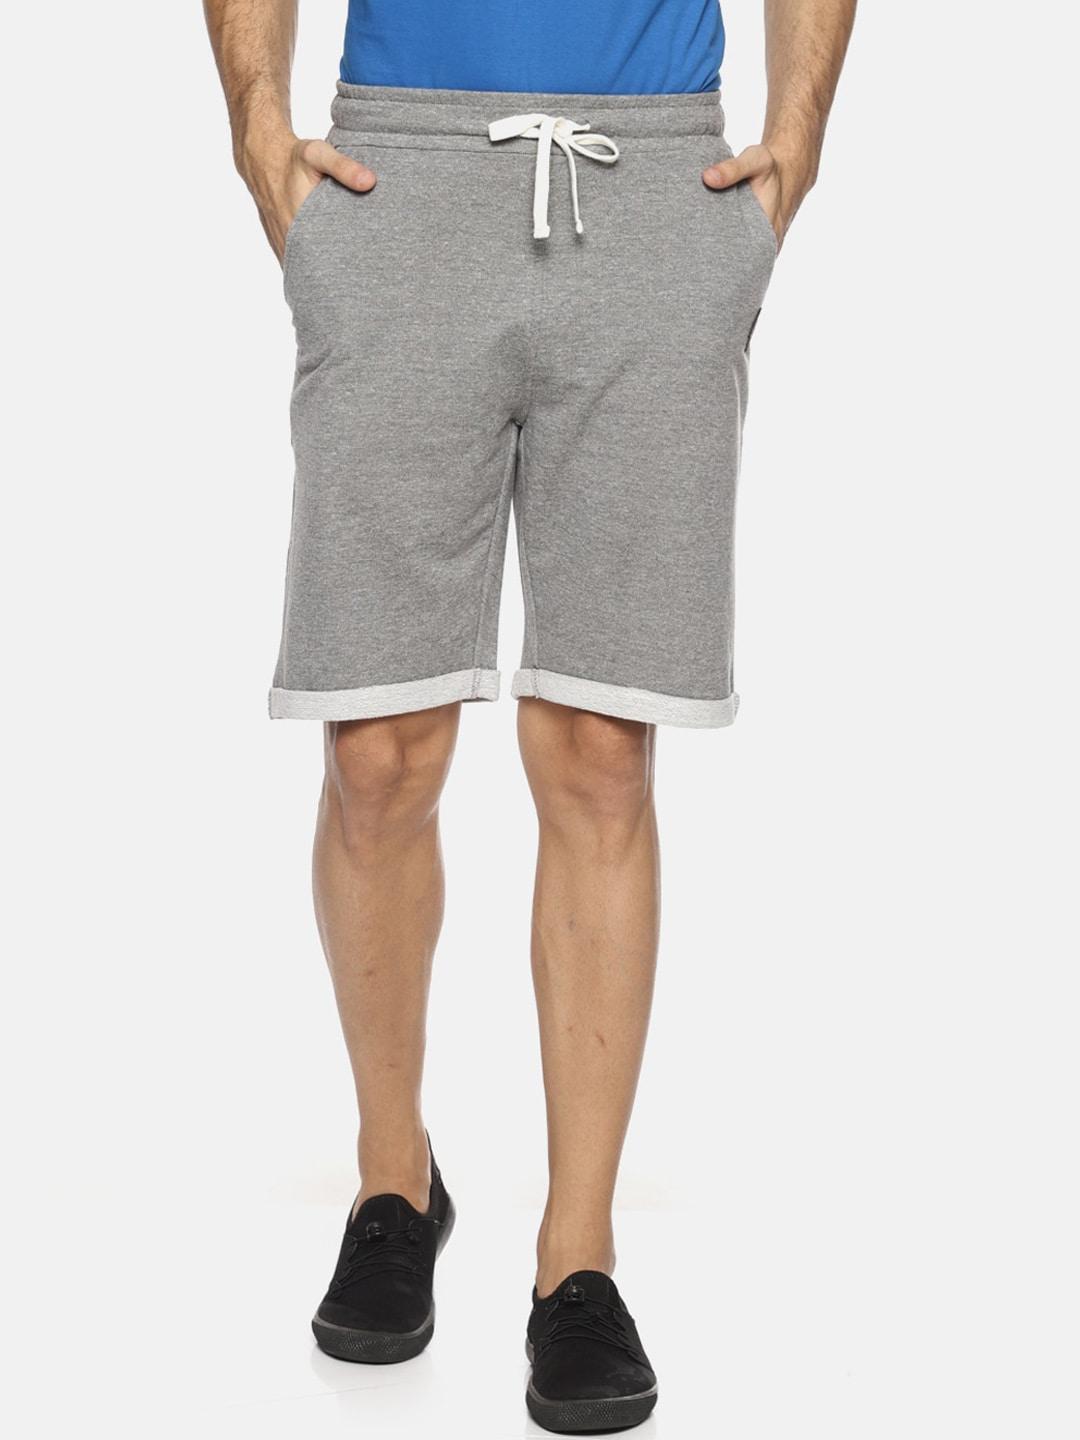 Masculino Latino Men Rapid-Dry Cotton Shorts